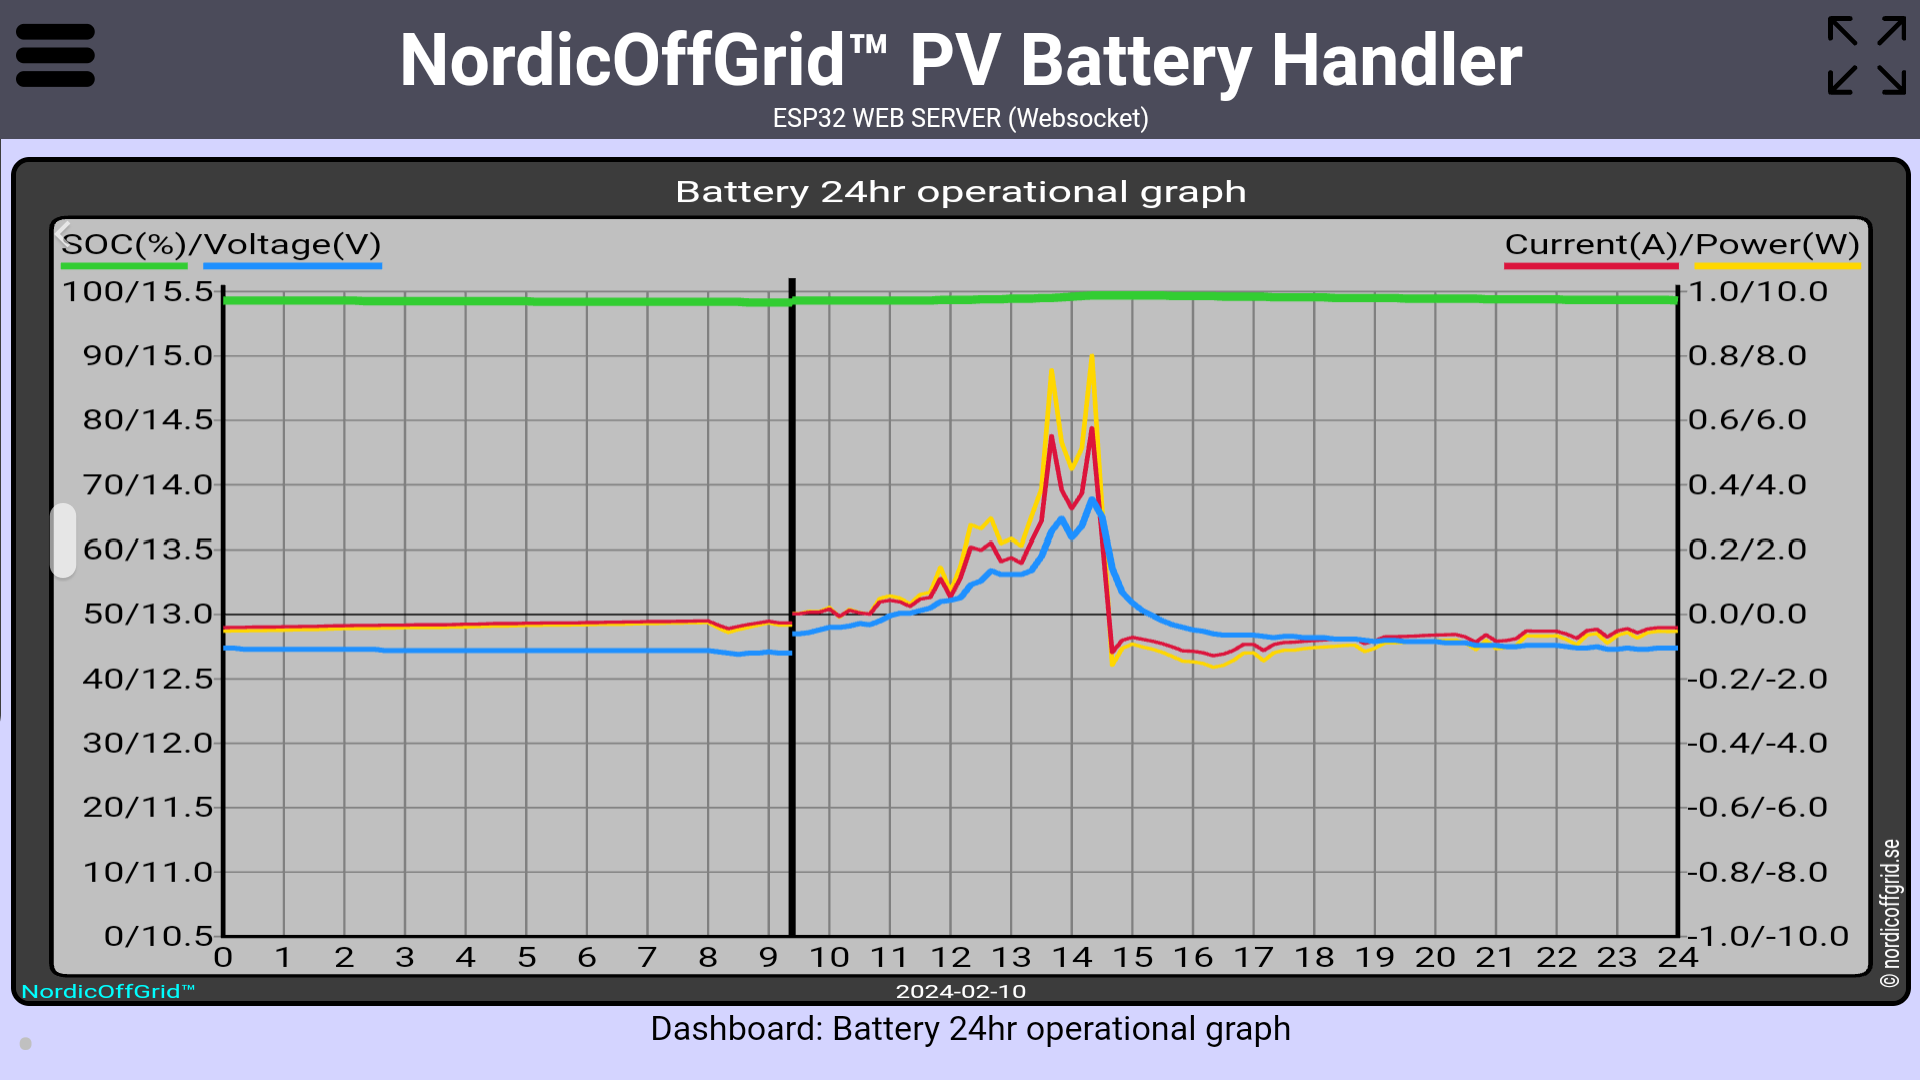 Battery 24hr operational graph